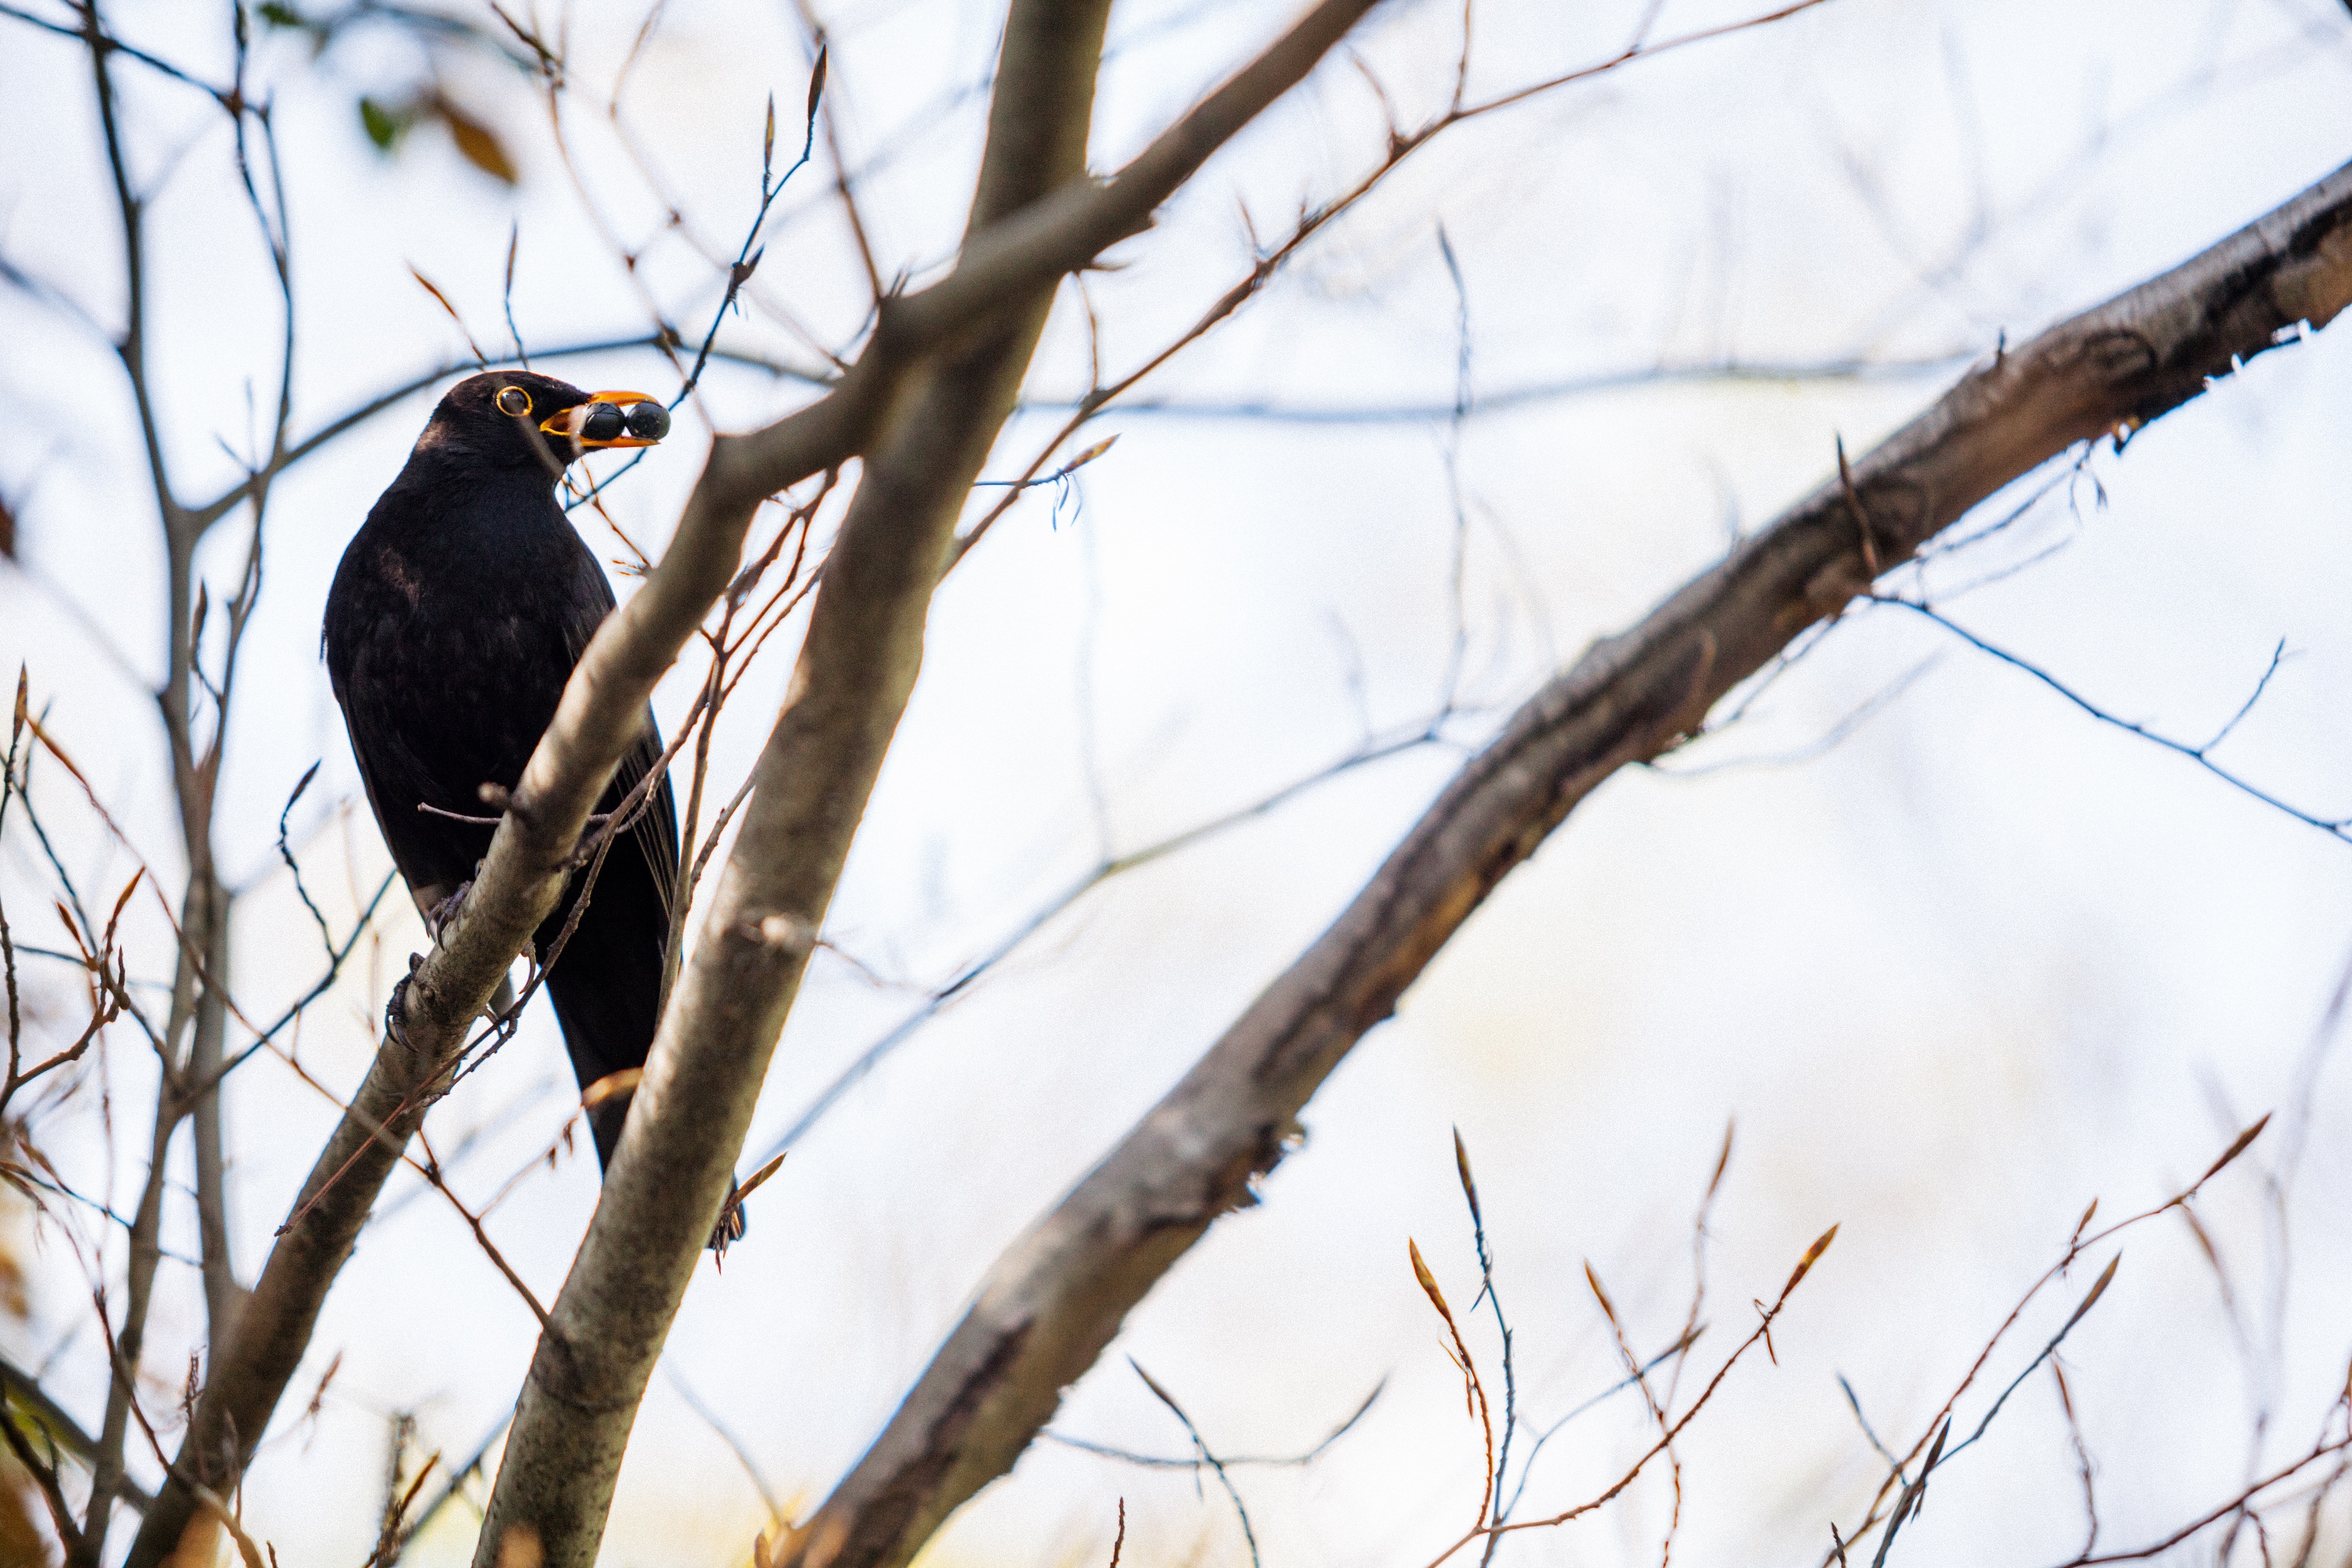 black fur bird on brown tree trunks